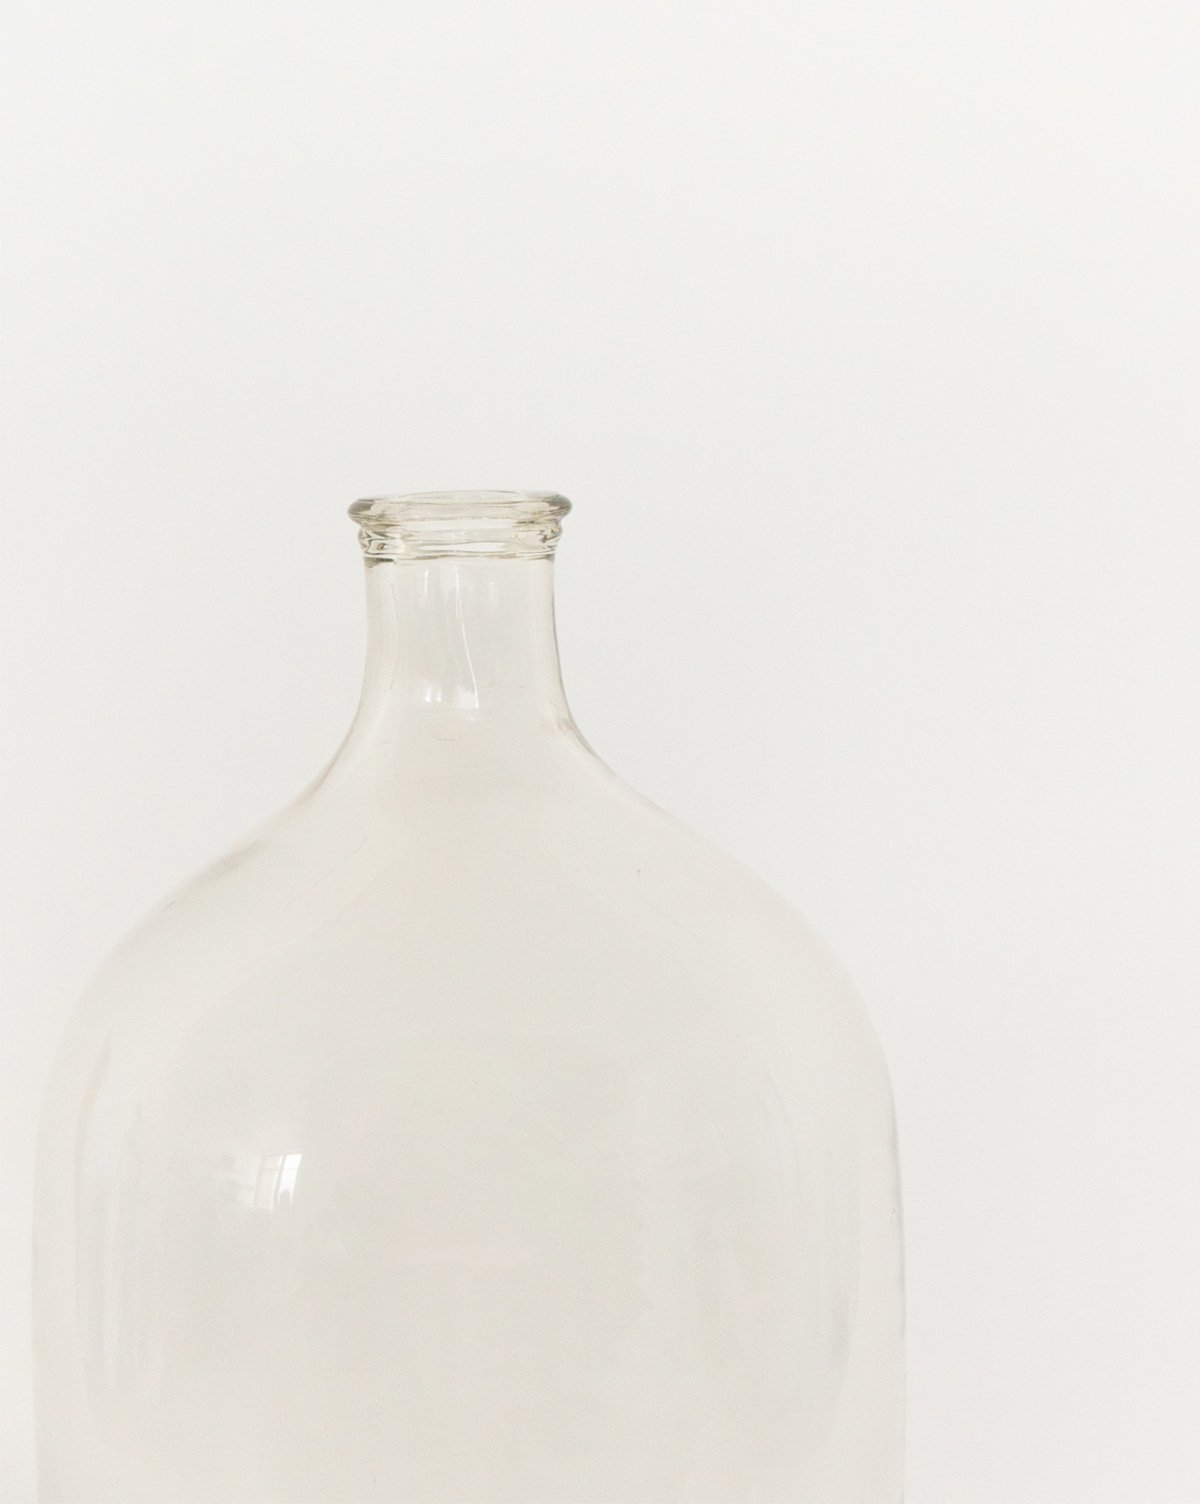 Tara Glass Bottle Vase - Image 2